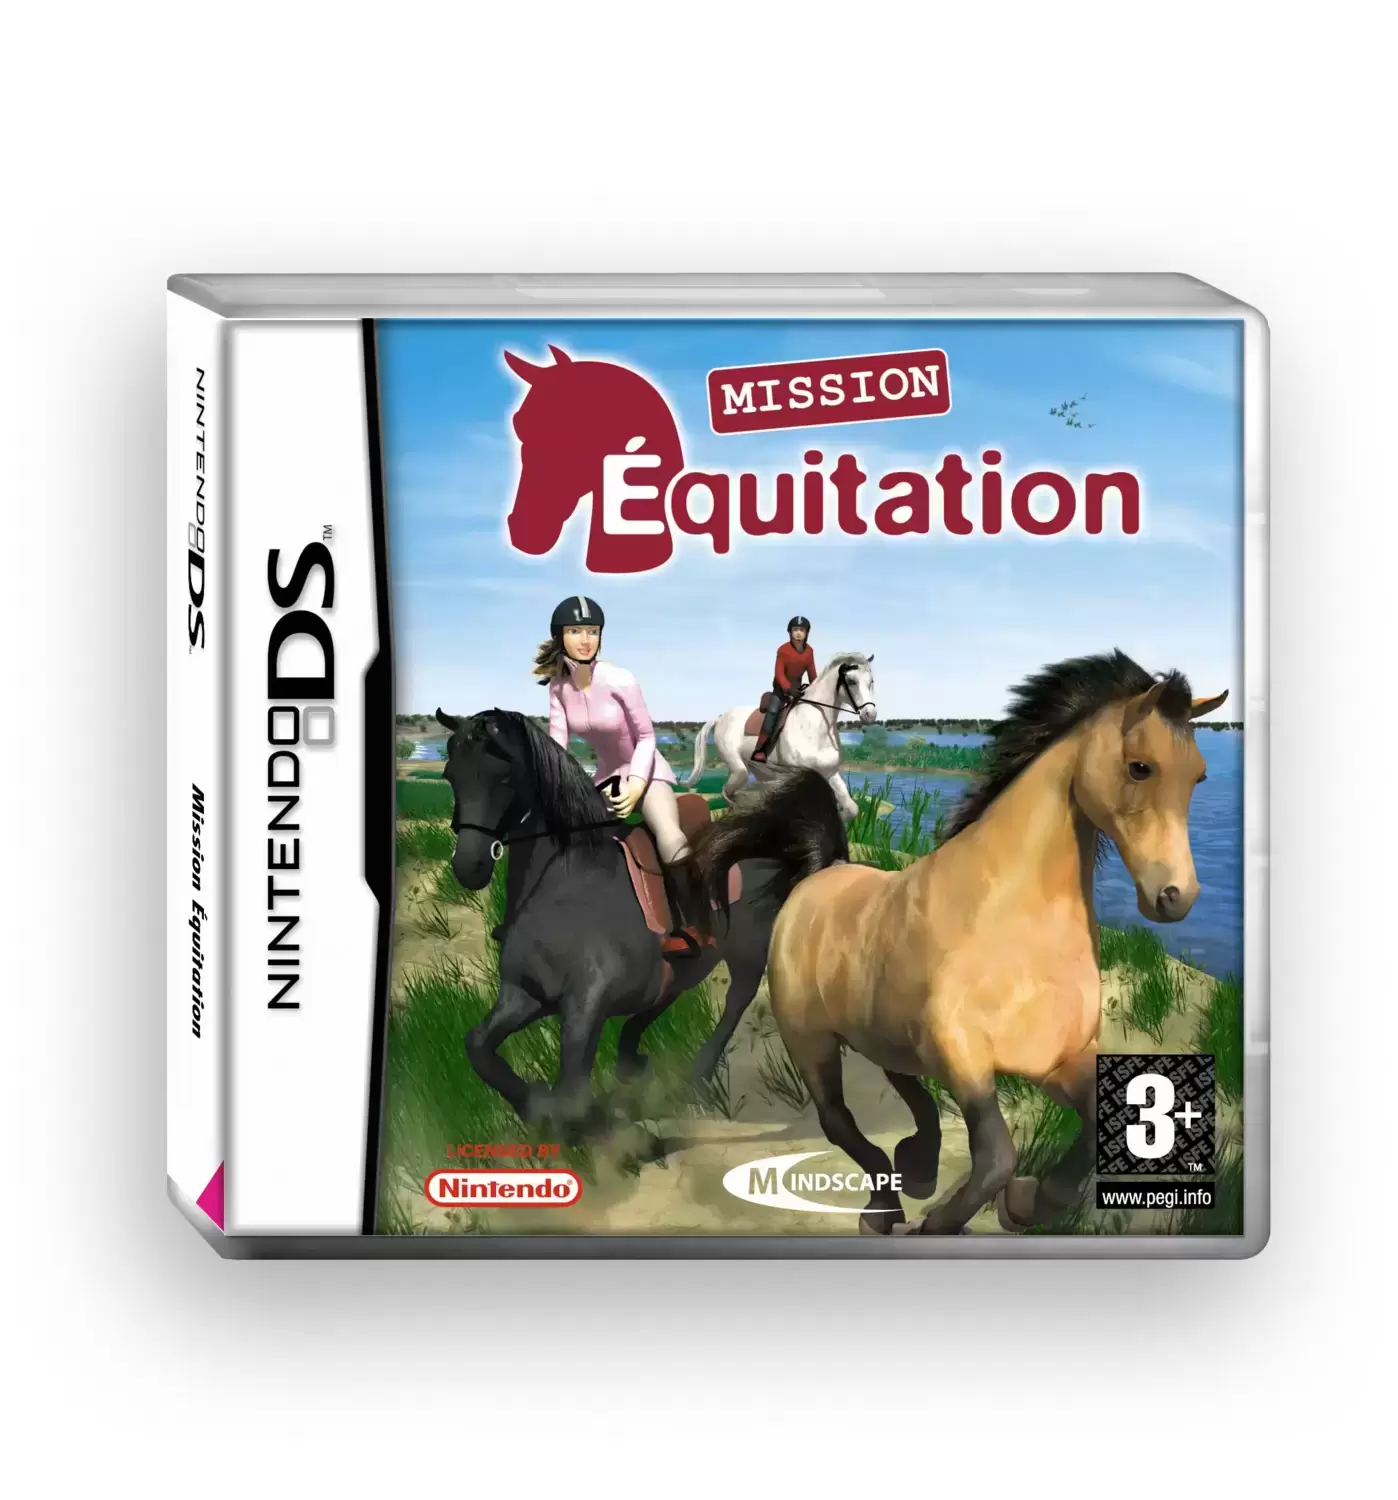 Nintendo DS Games - Mission Equitation